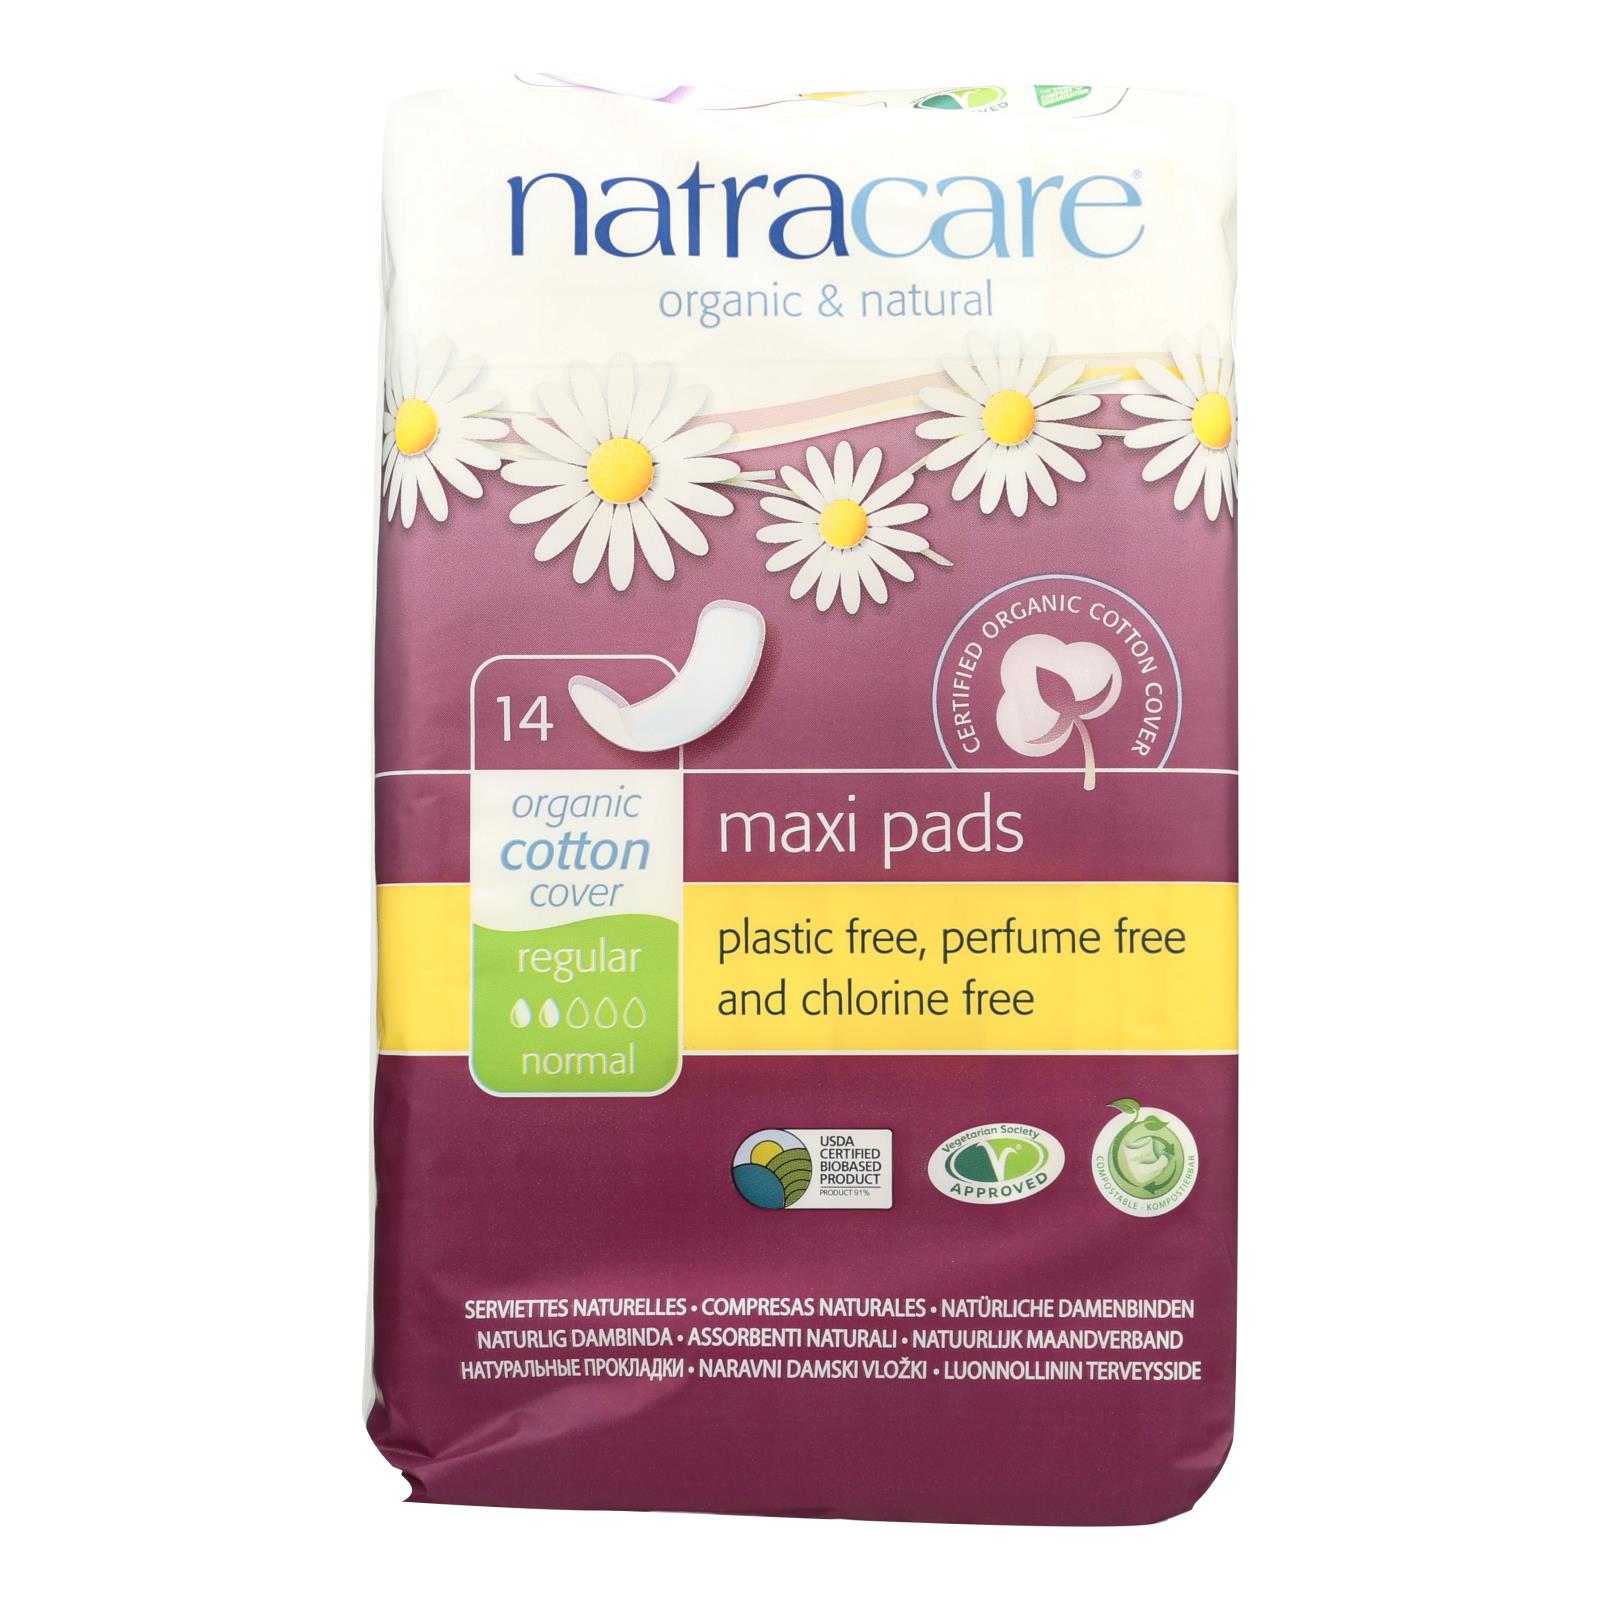 Natracare Organic & Natural Maxi Pads - 12개 묶음상품 - 14 CT